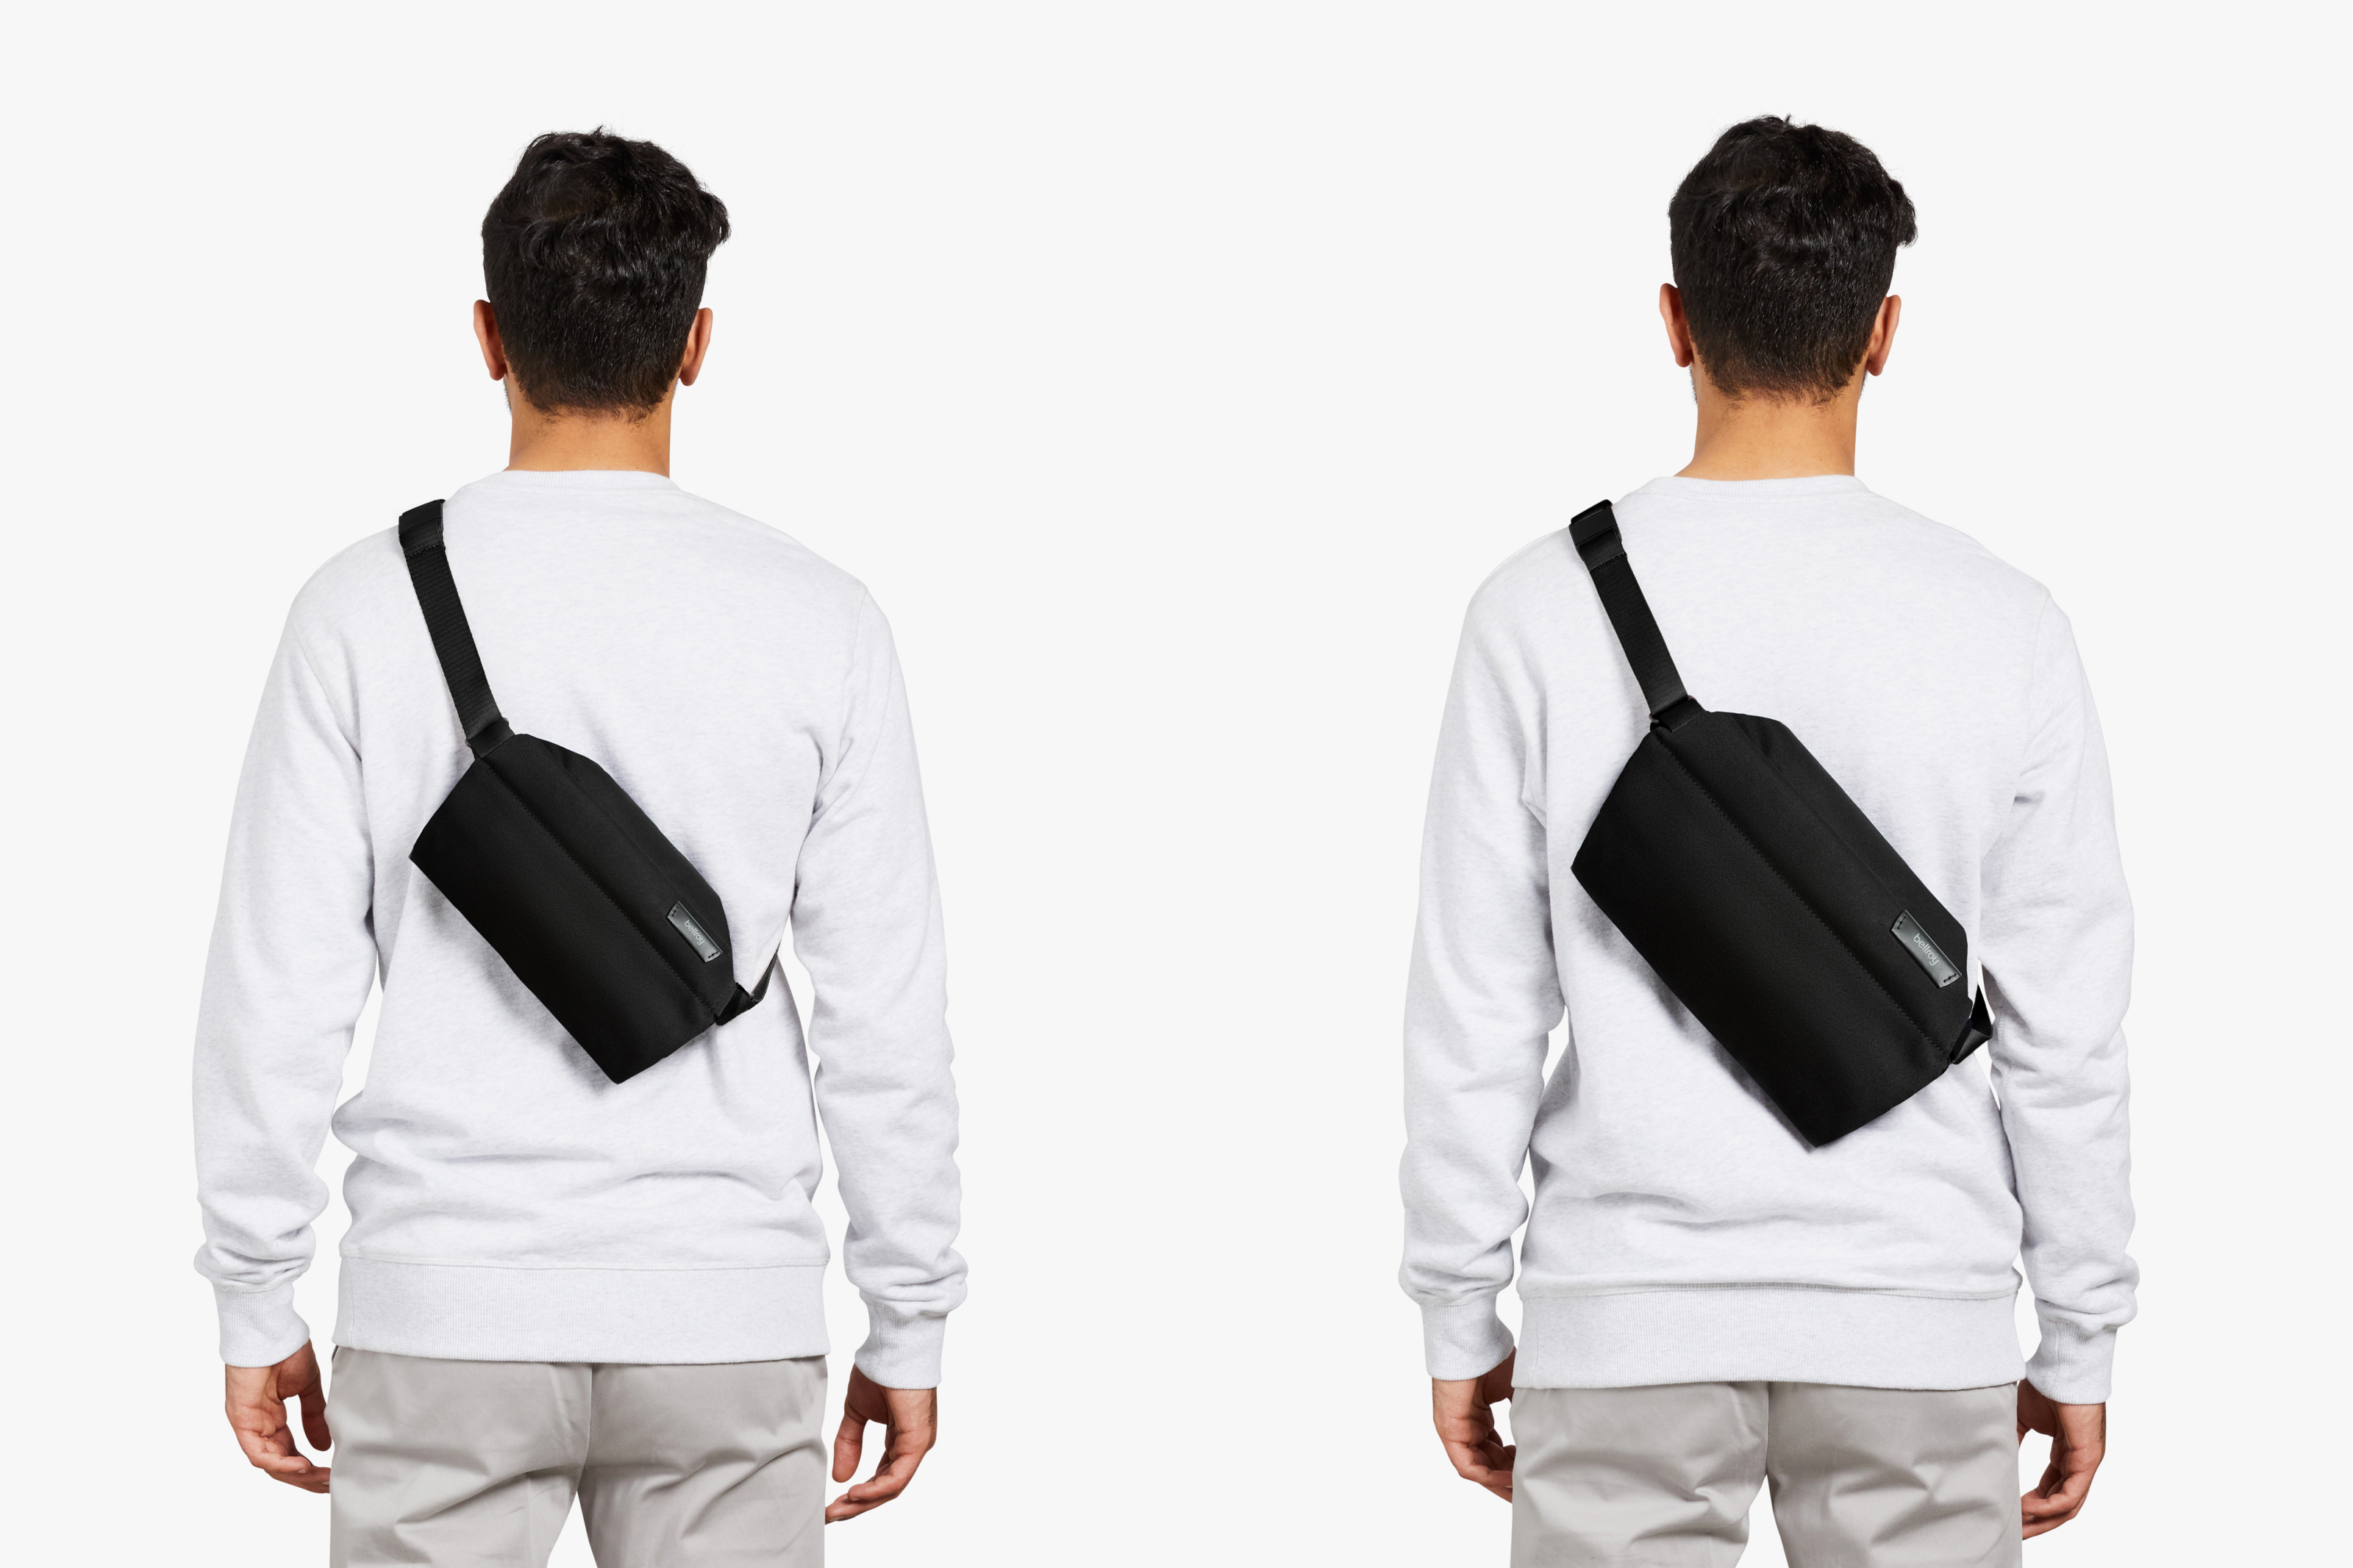 Sling | ユニセックスのベルトバッグ、耐水性素材を使用 | ベルロイ